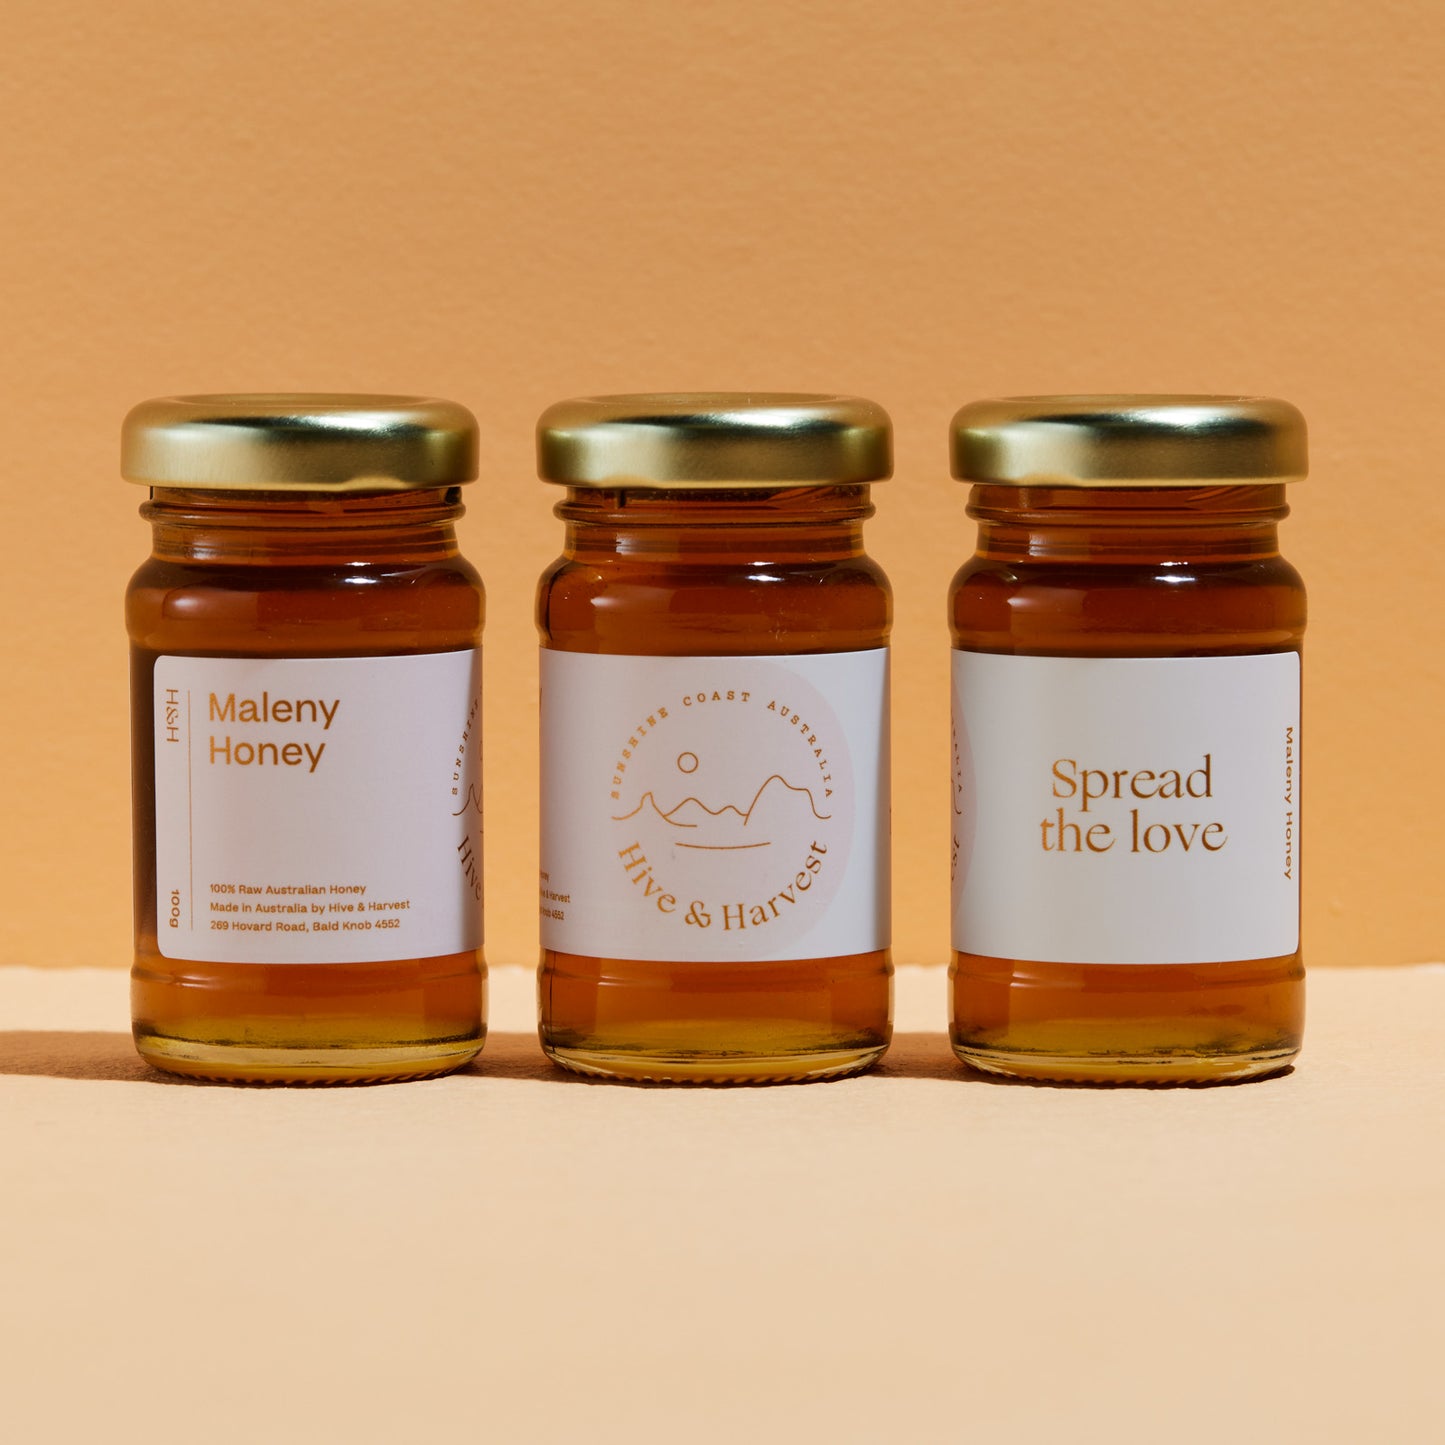 Maleny Honey Petite "Spread the Love"